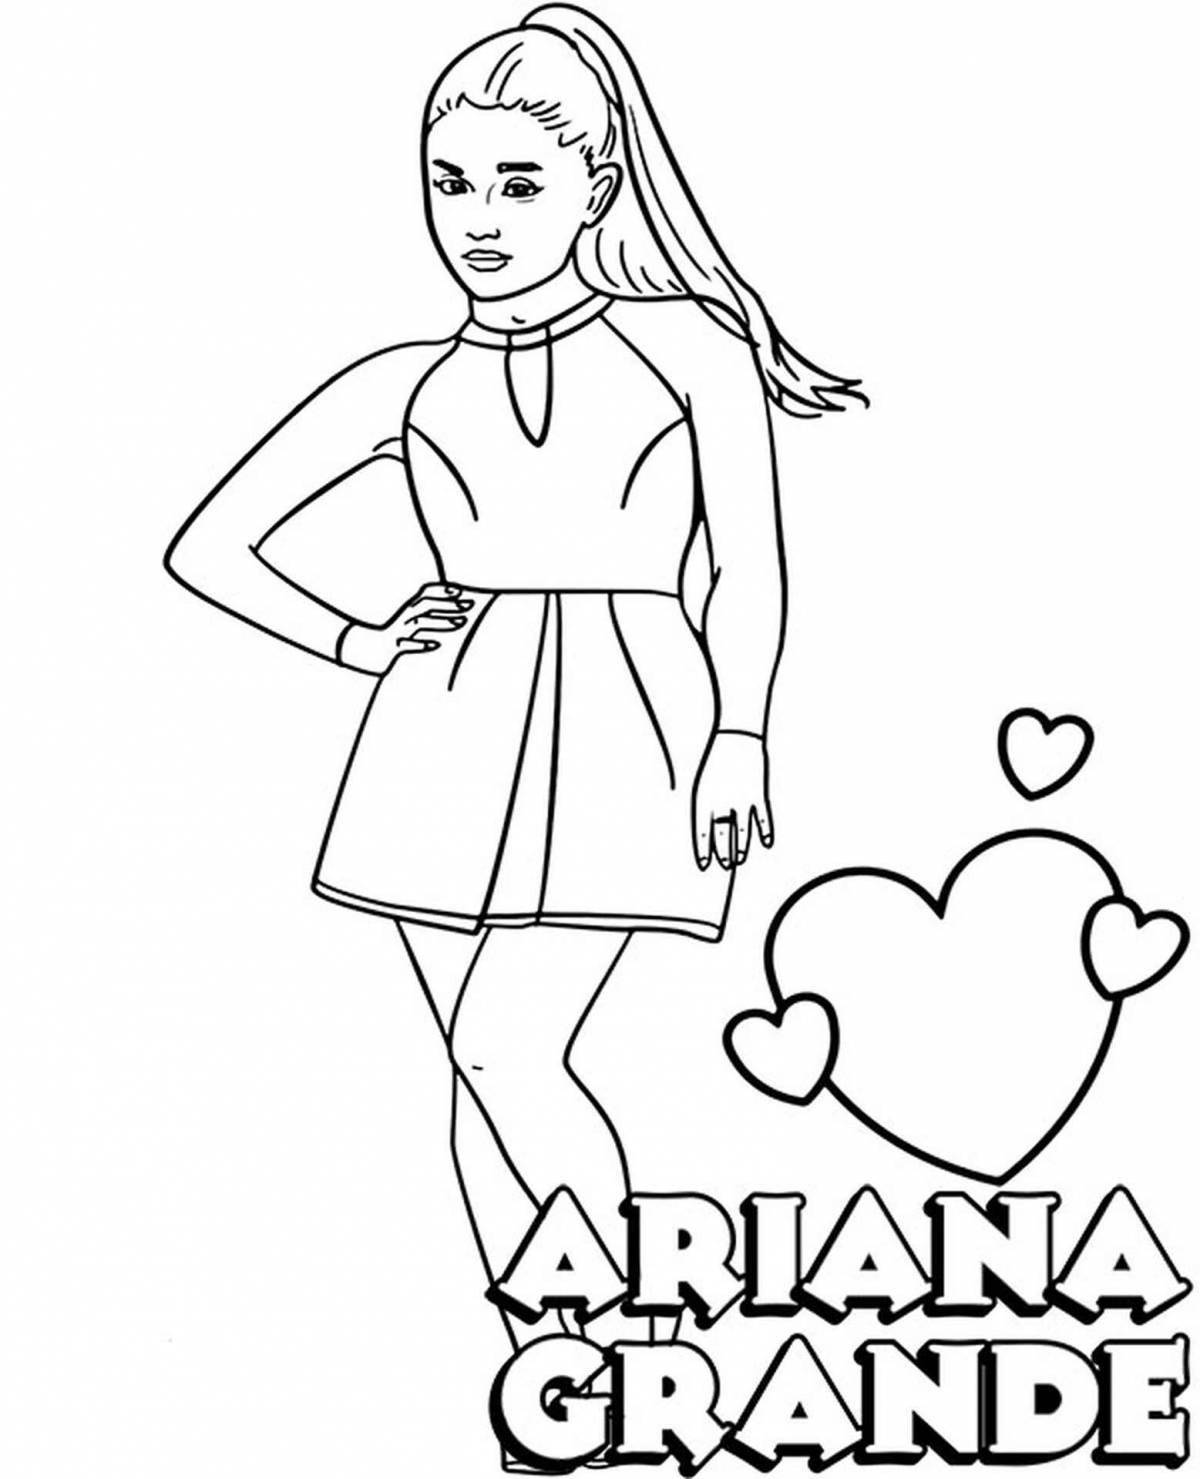 Ariana Grande's funny coloring book